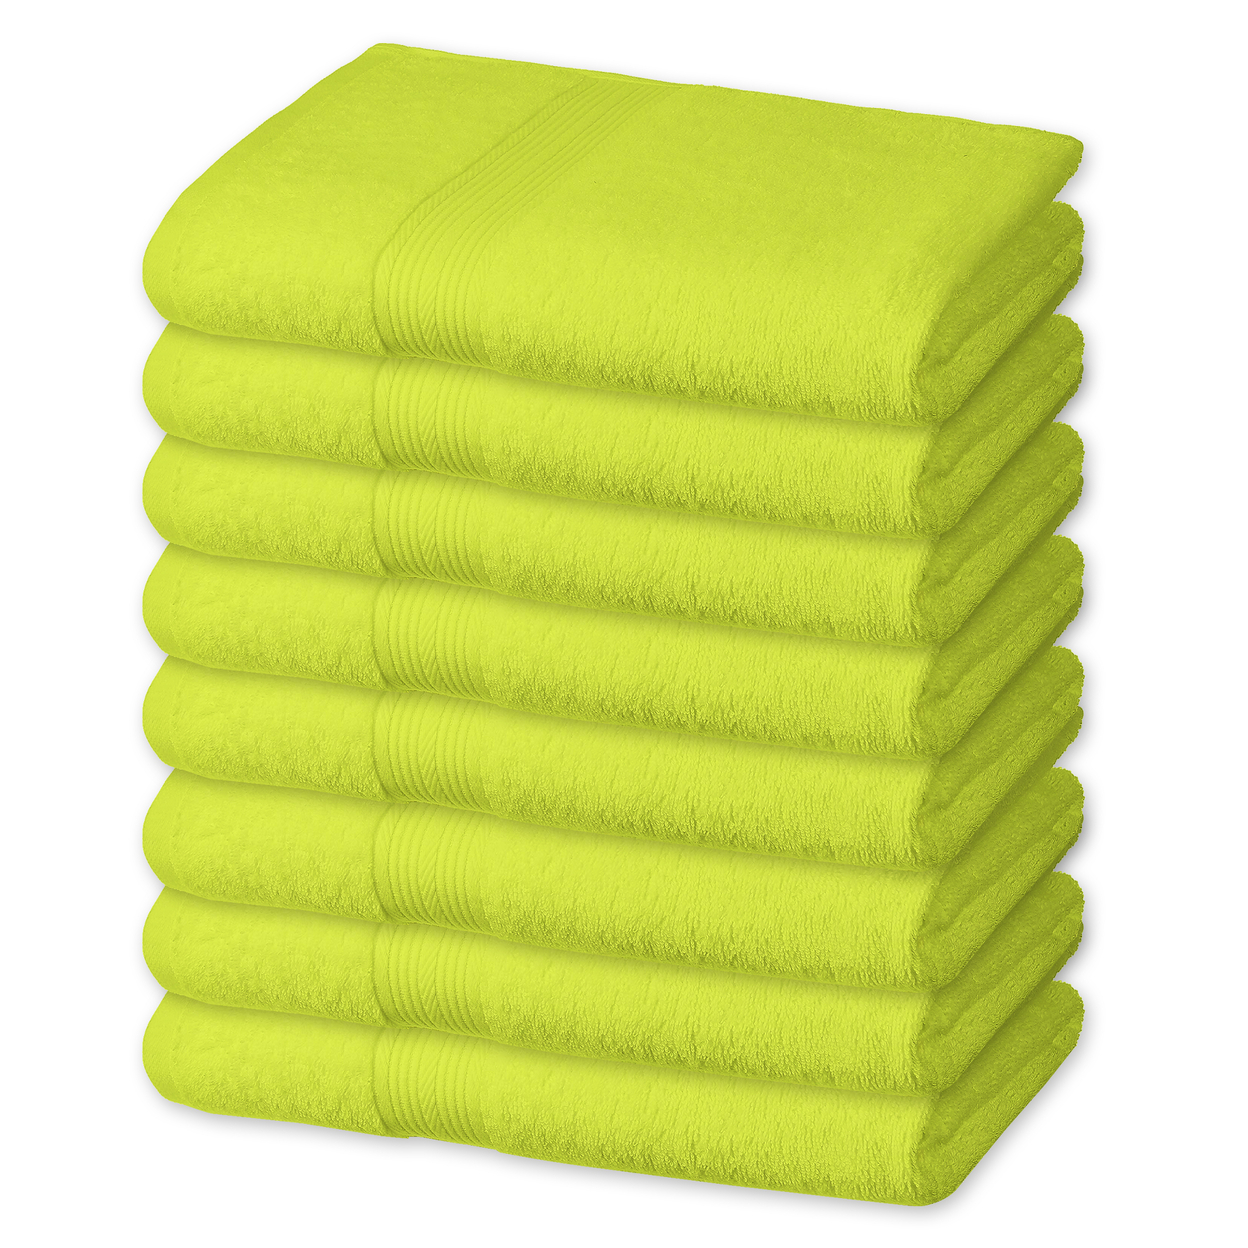 4-Pack: Super Absorbent 100% Cotton 54 X 27 Hotel Beach Bath Towels - Green